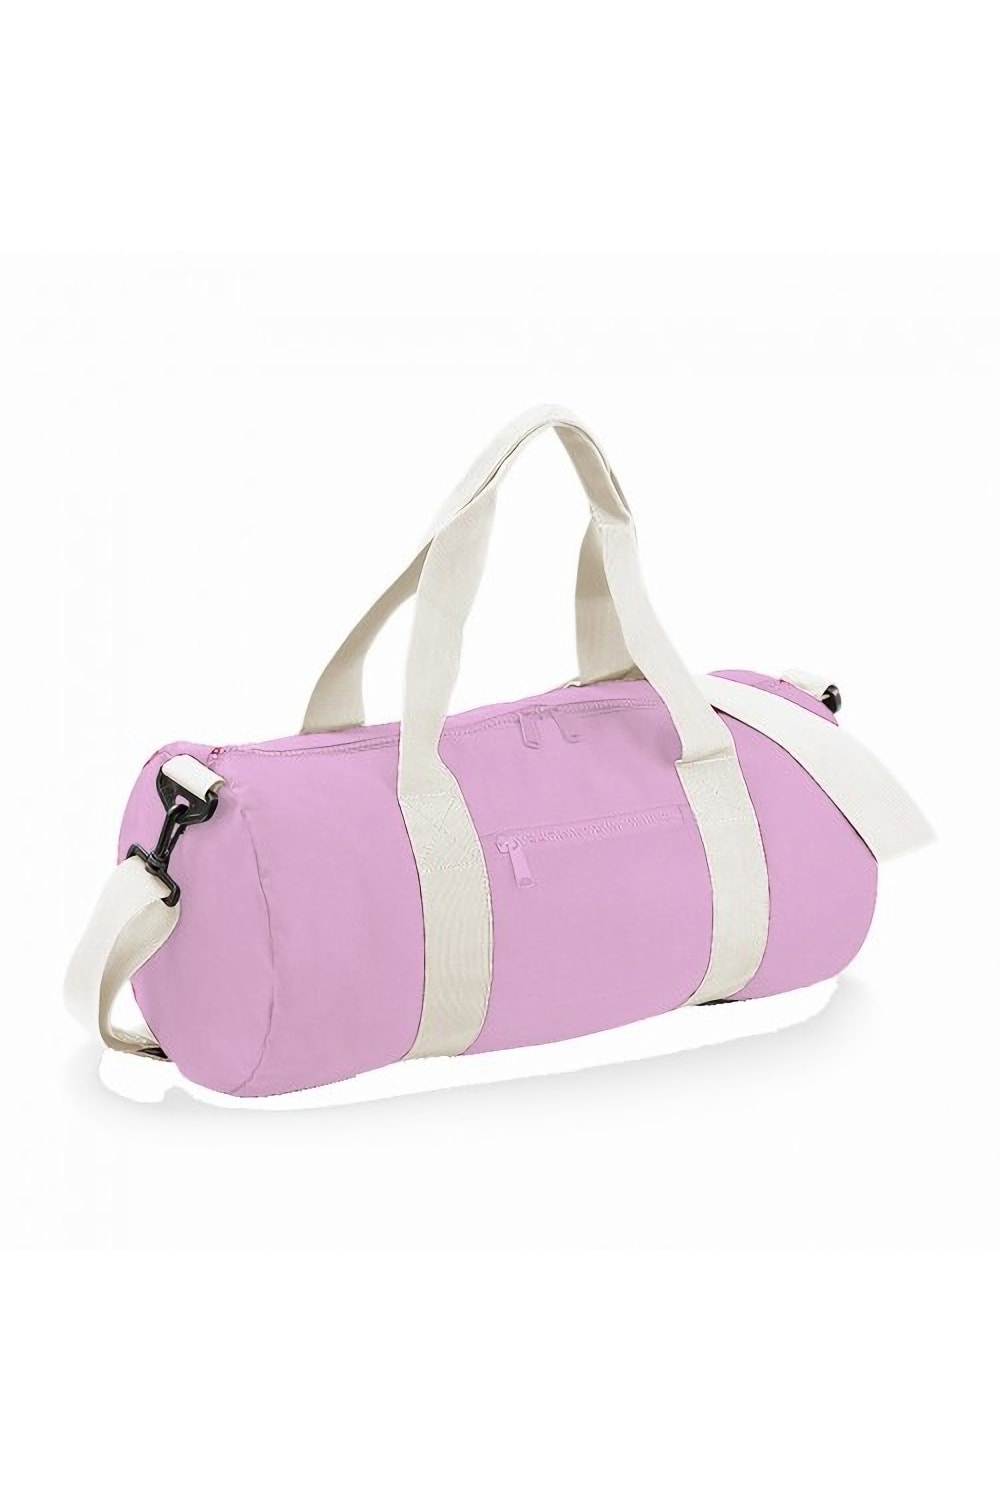 Plain Varsity Barrel/Duffel Bag (20 Liters) (CLassic Pink/White)